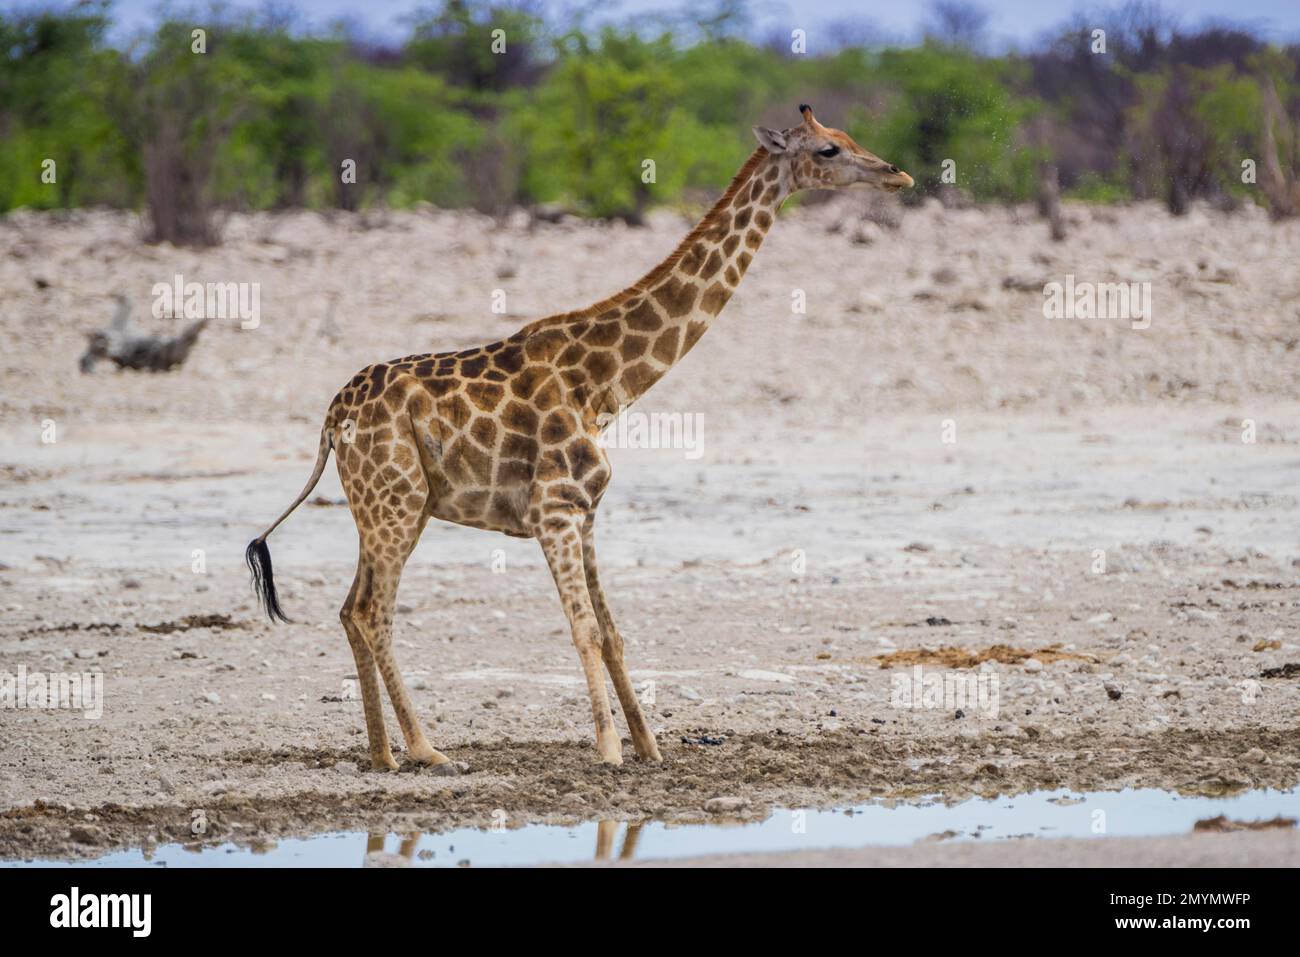 Angolan giraffe (Giraffa camelopardalis angolensis) at a waterhole, Etosha National Park, Namibia, Africa Stock Photo